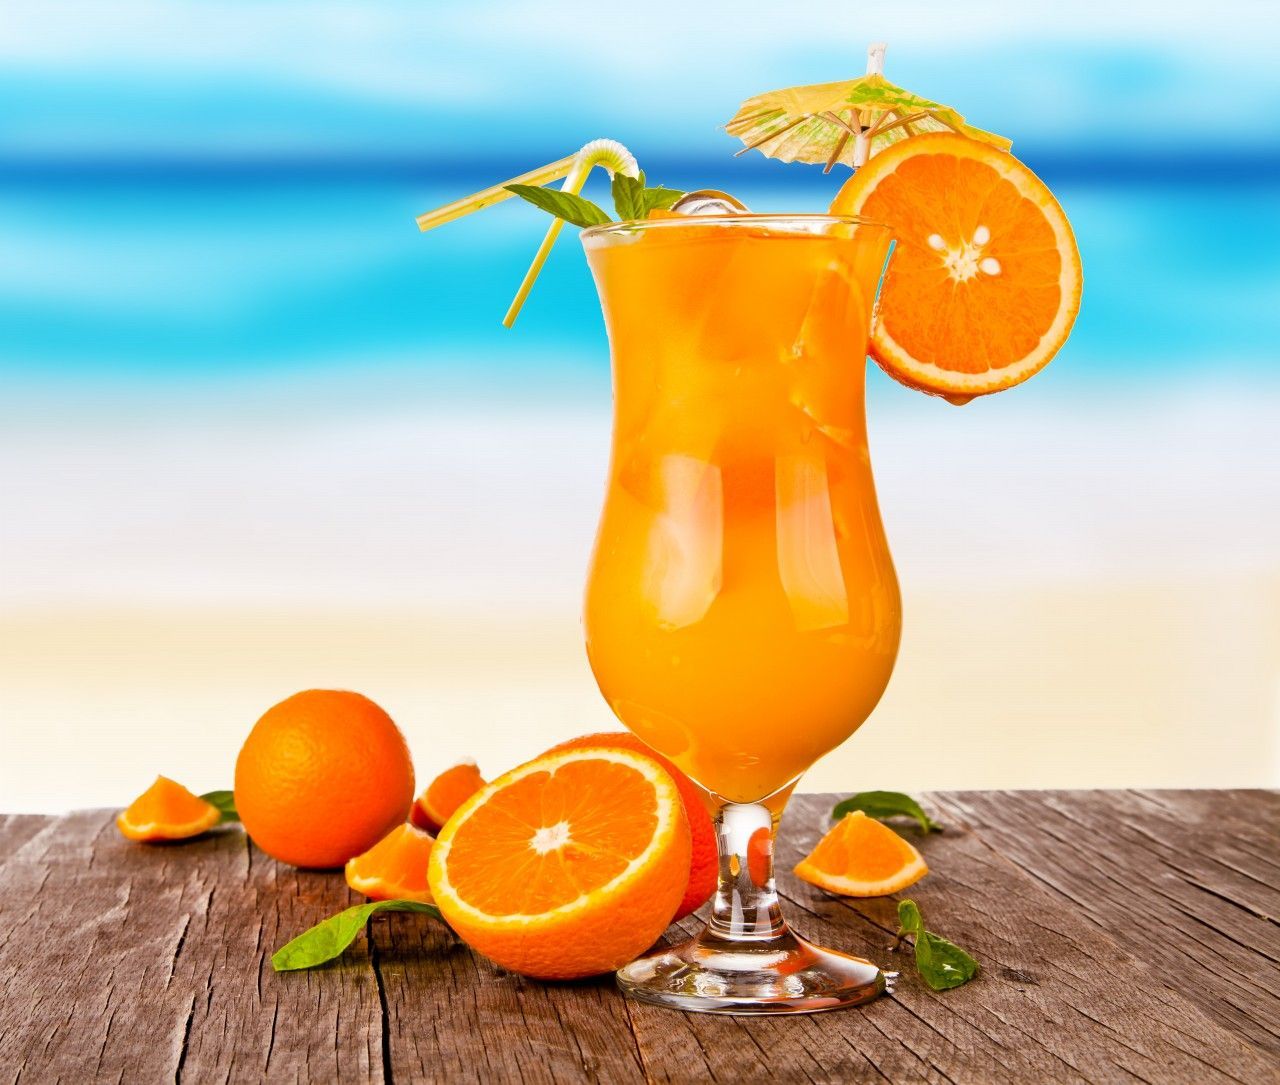 Peppermint #Mocha #Scones Recipes. Orange juice cocktails, Summer drinks, Tropical fruits